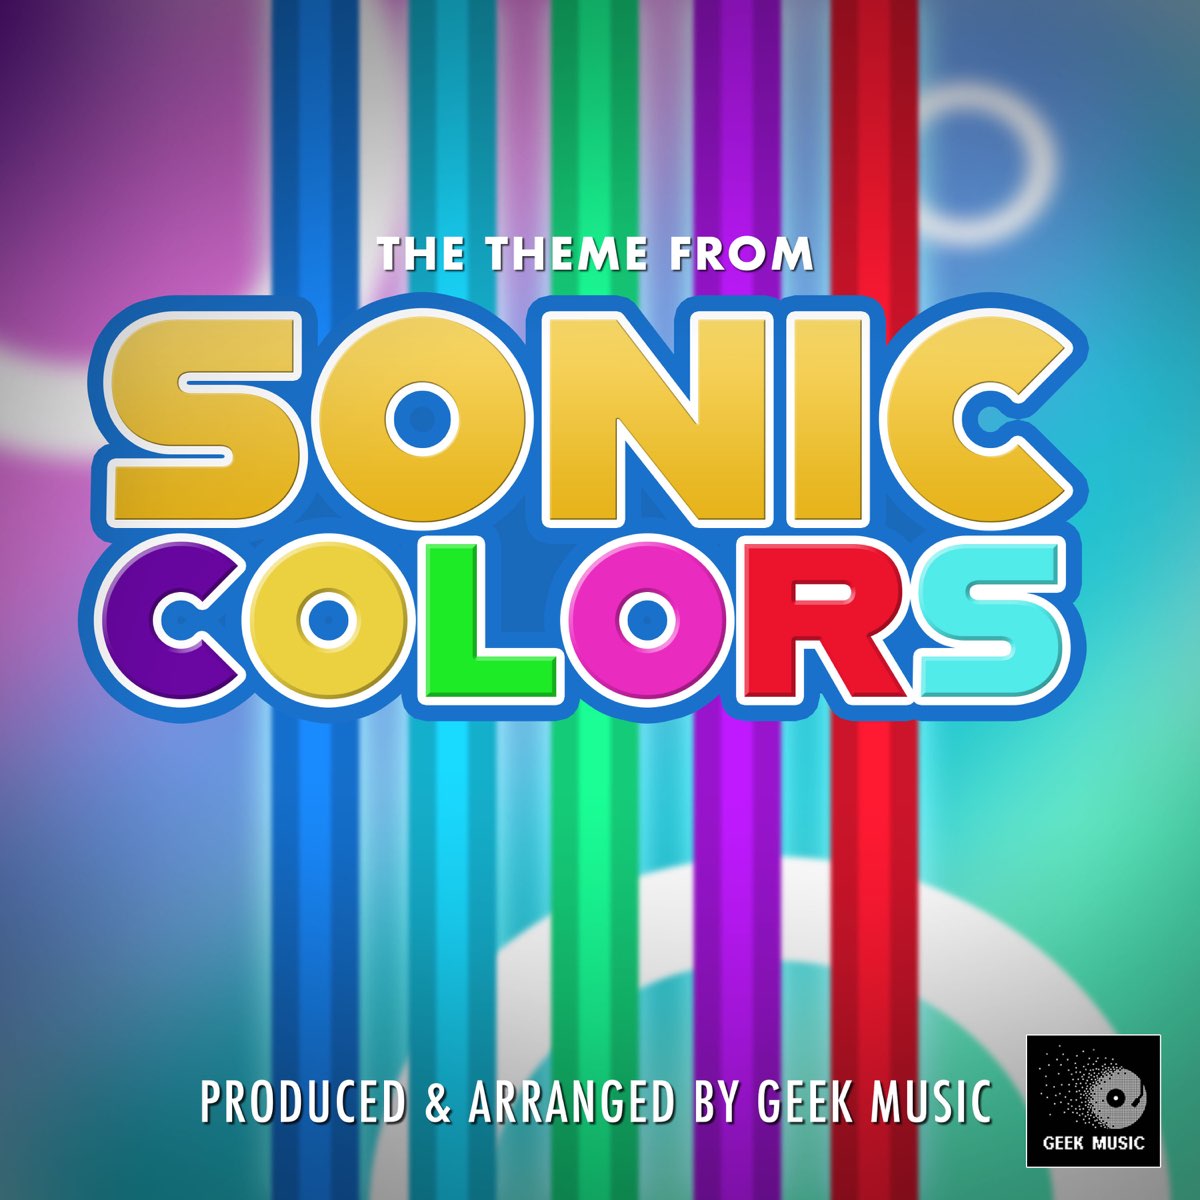 sonic colors logo